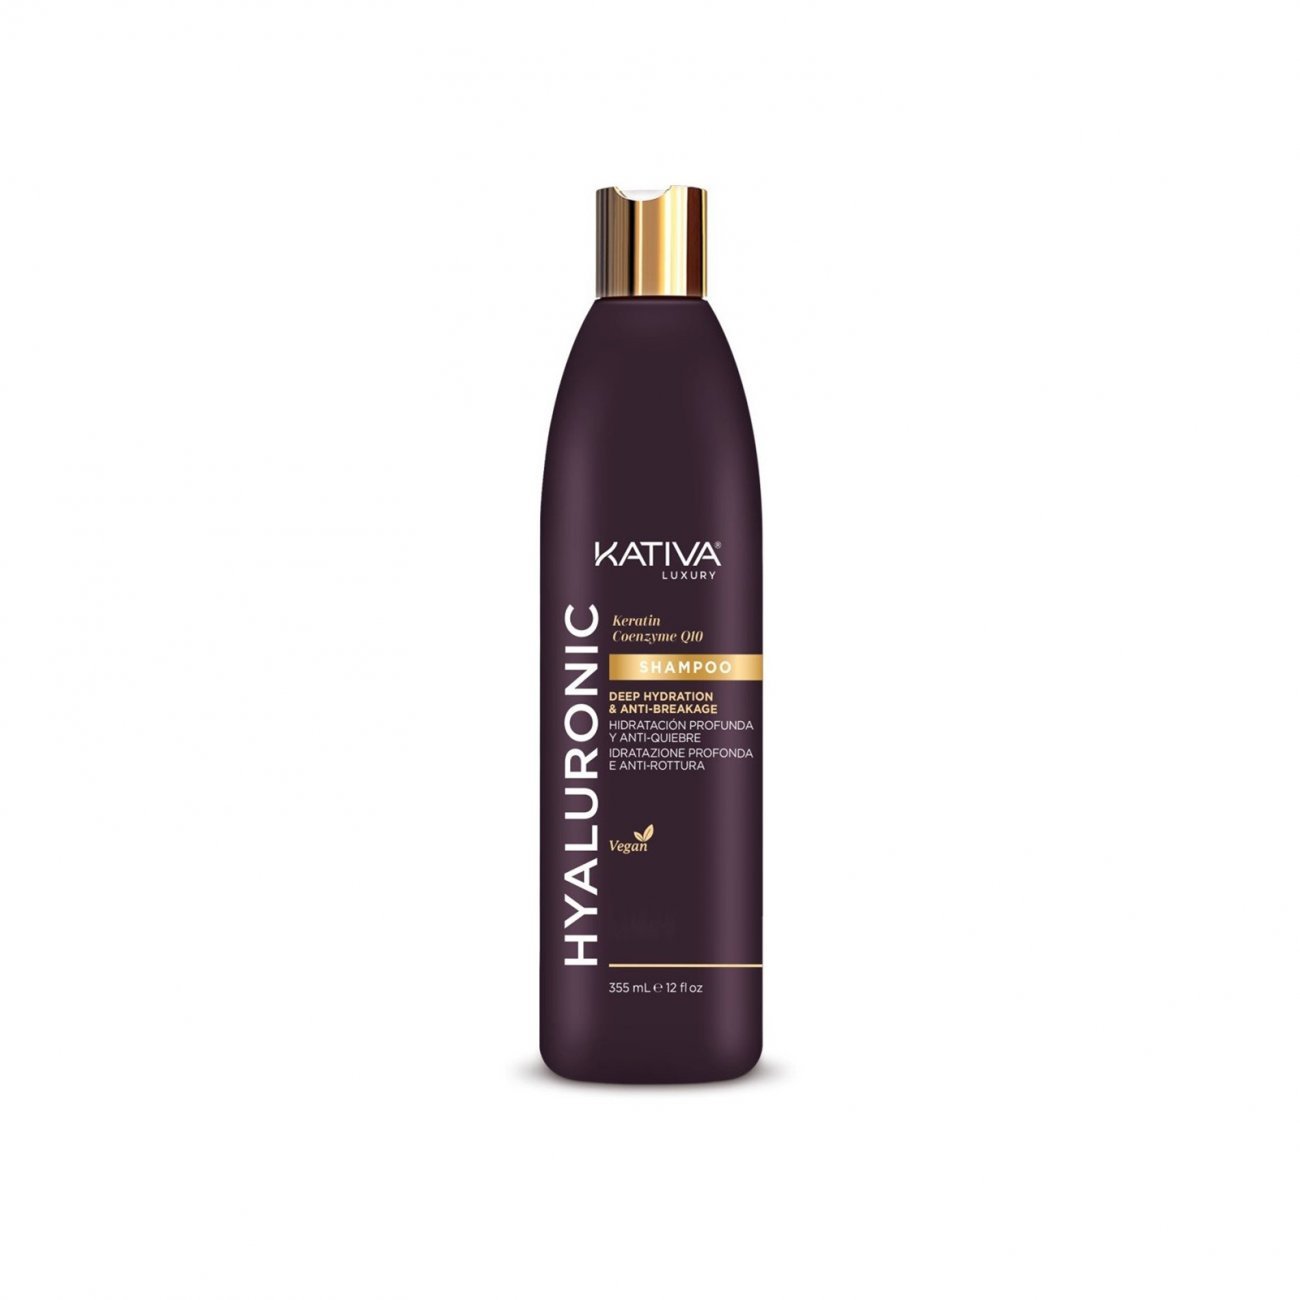 Buy Kativa Luxury Hydration & Anti-Breakage Shampoo (12 fl oz) · USA